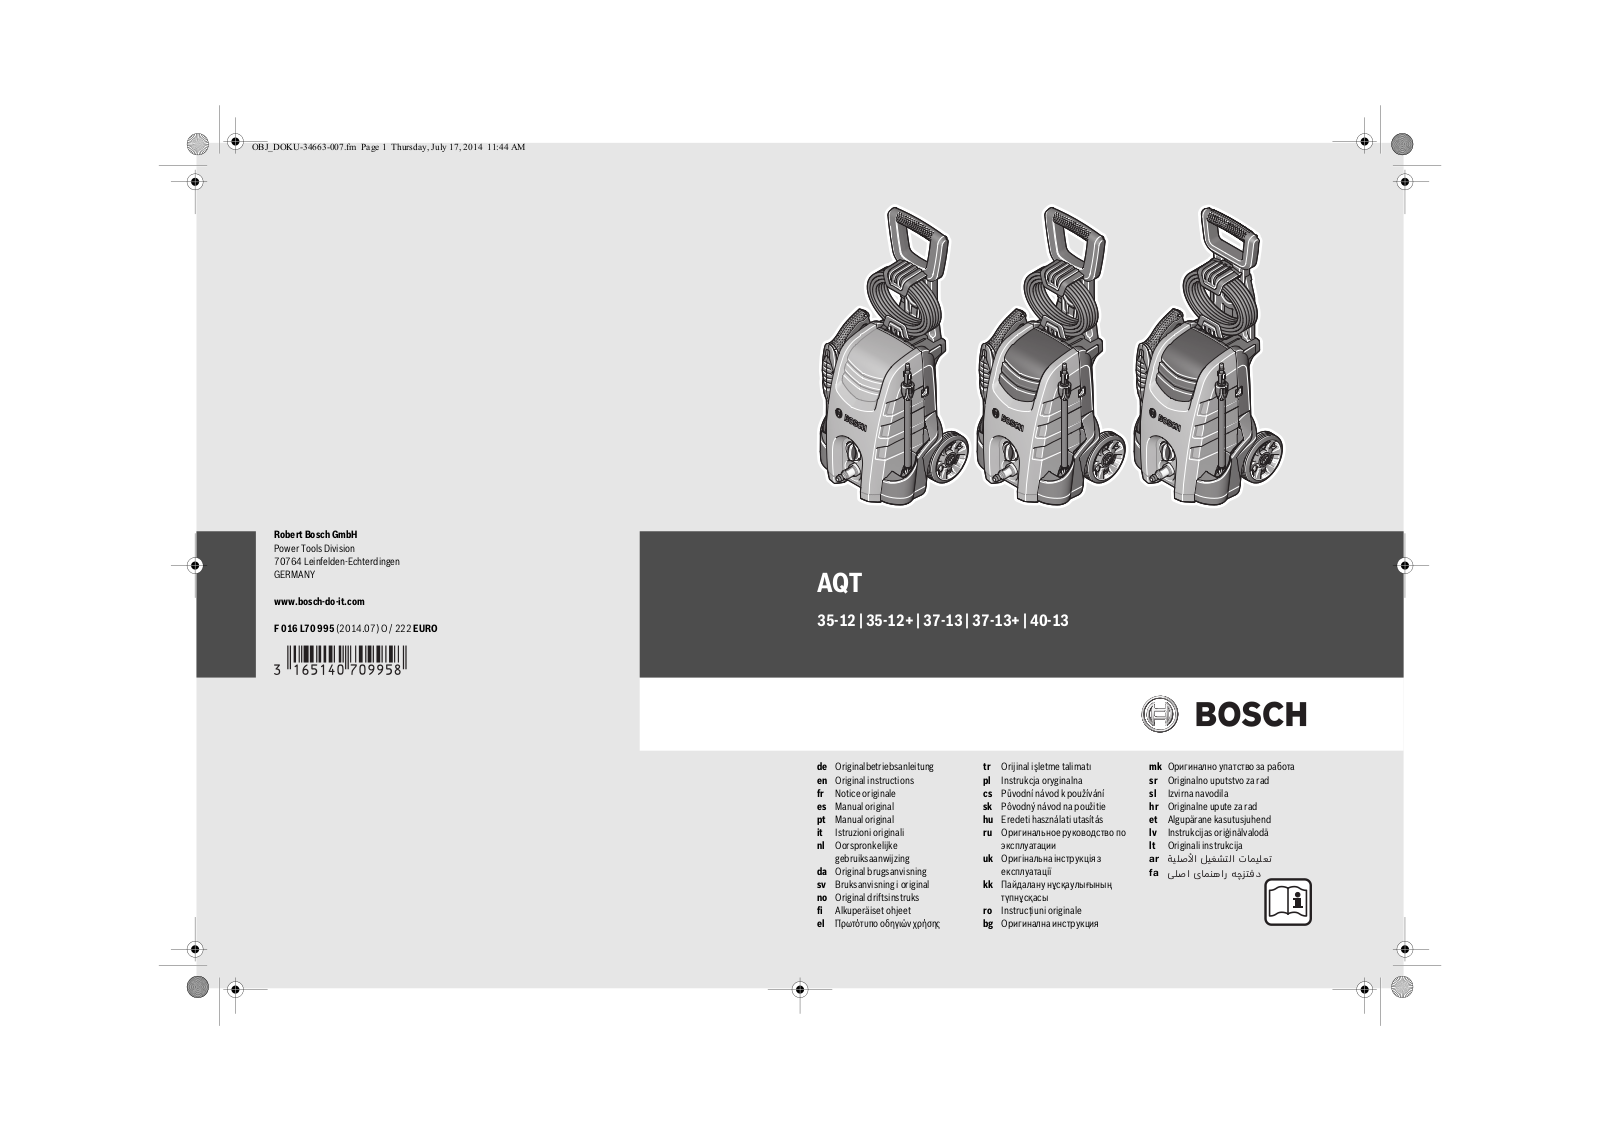 Bosch AQT 37-13 + hadice User Manual